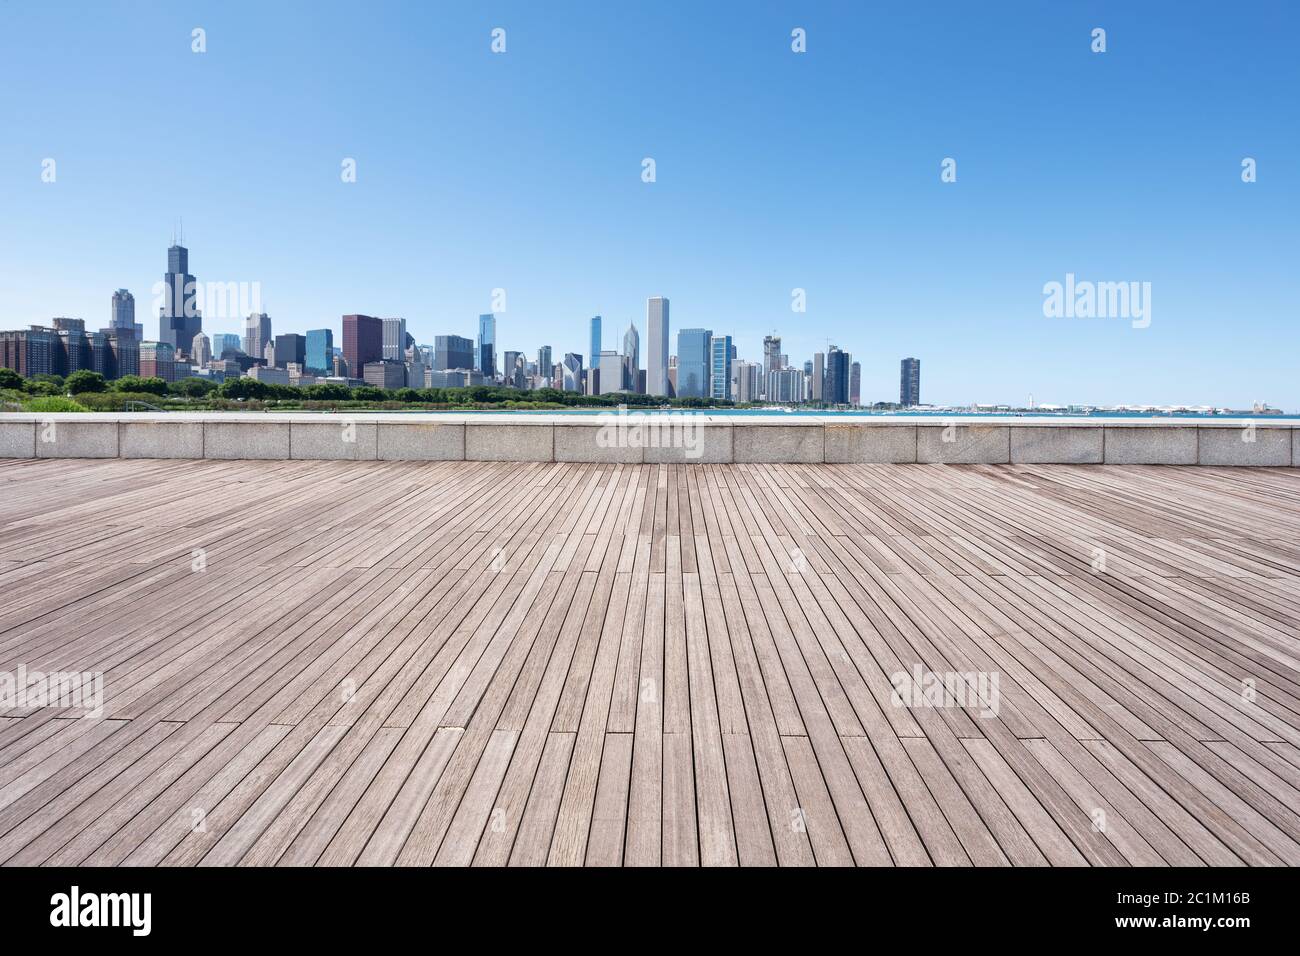 Leerer Boden mit modernem Stadtbild in chicago Stockfoto